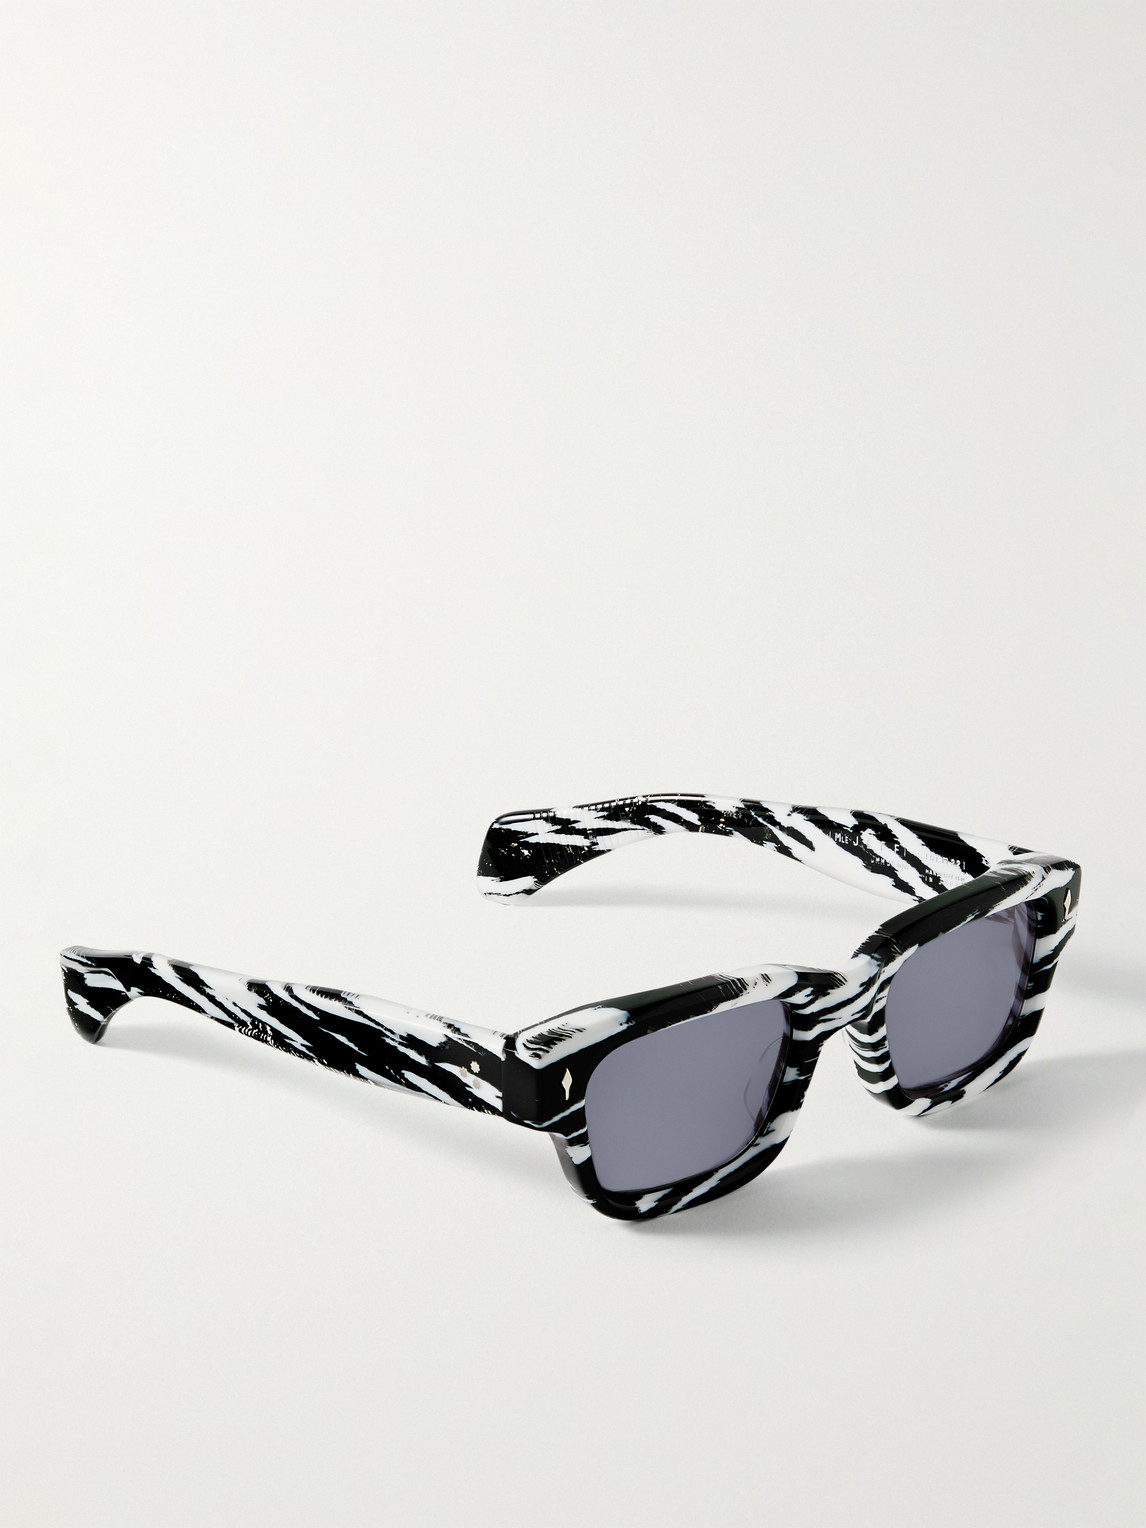 Shop Jacques Marie Mage Jeff Goldblum Jeff Rectangular-frame Zebra-print Acetate Sunglasses In Black